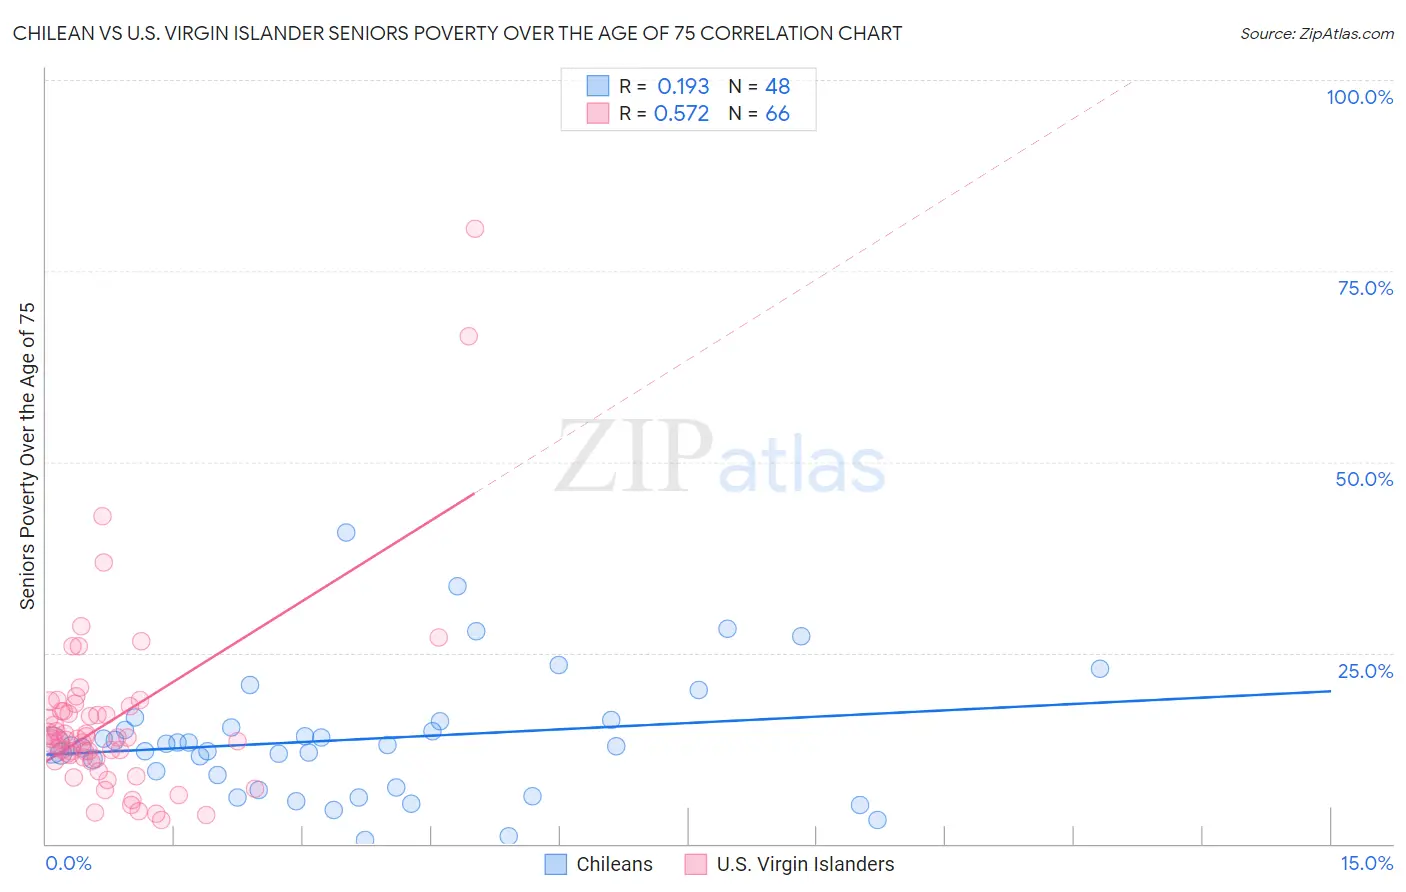 Chilean vs U.S. Virgin Islander Seniors Poverty Over the Age of 75